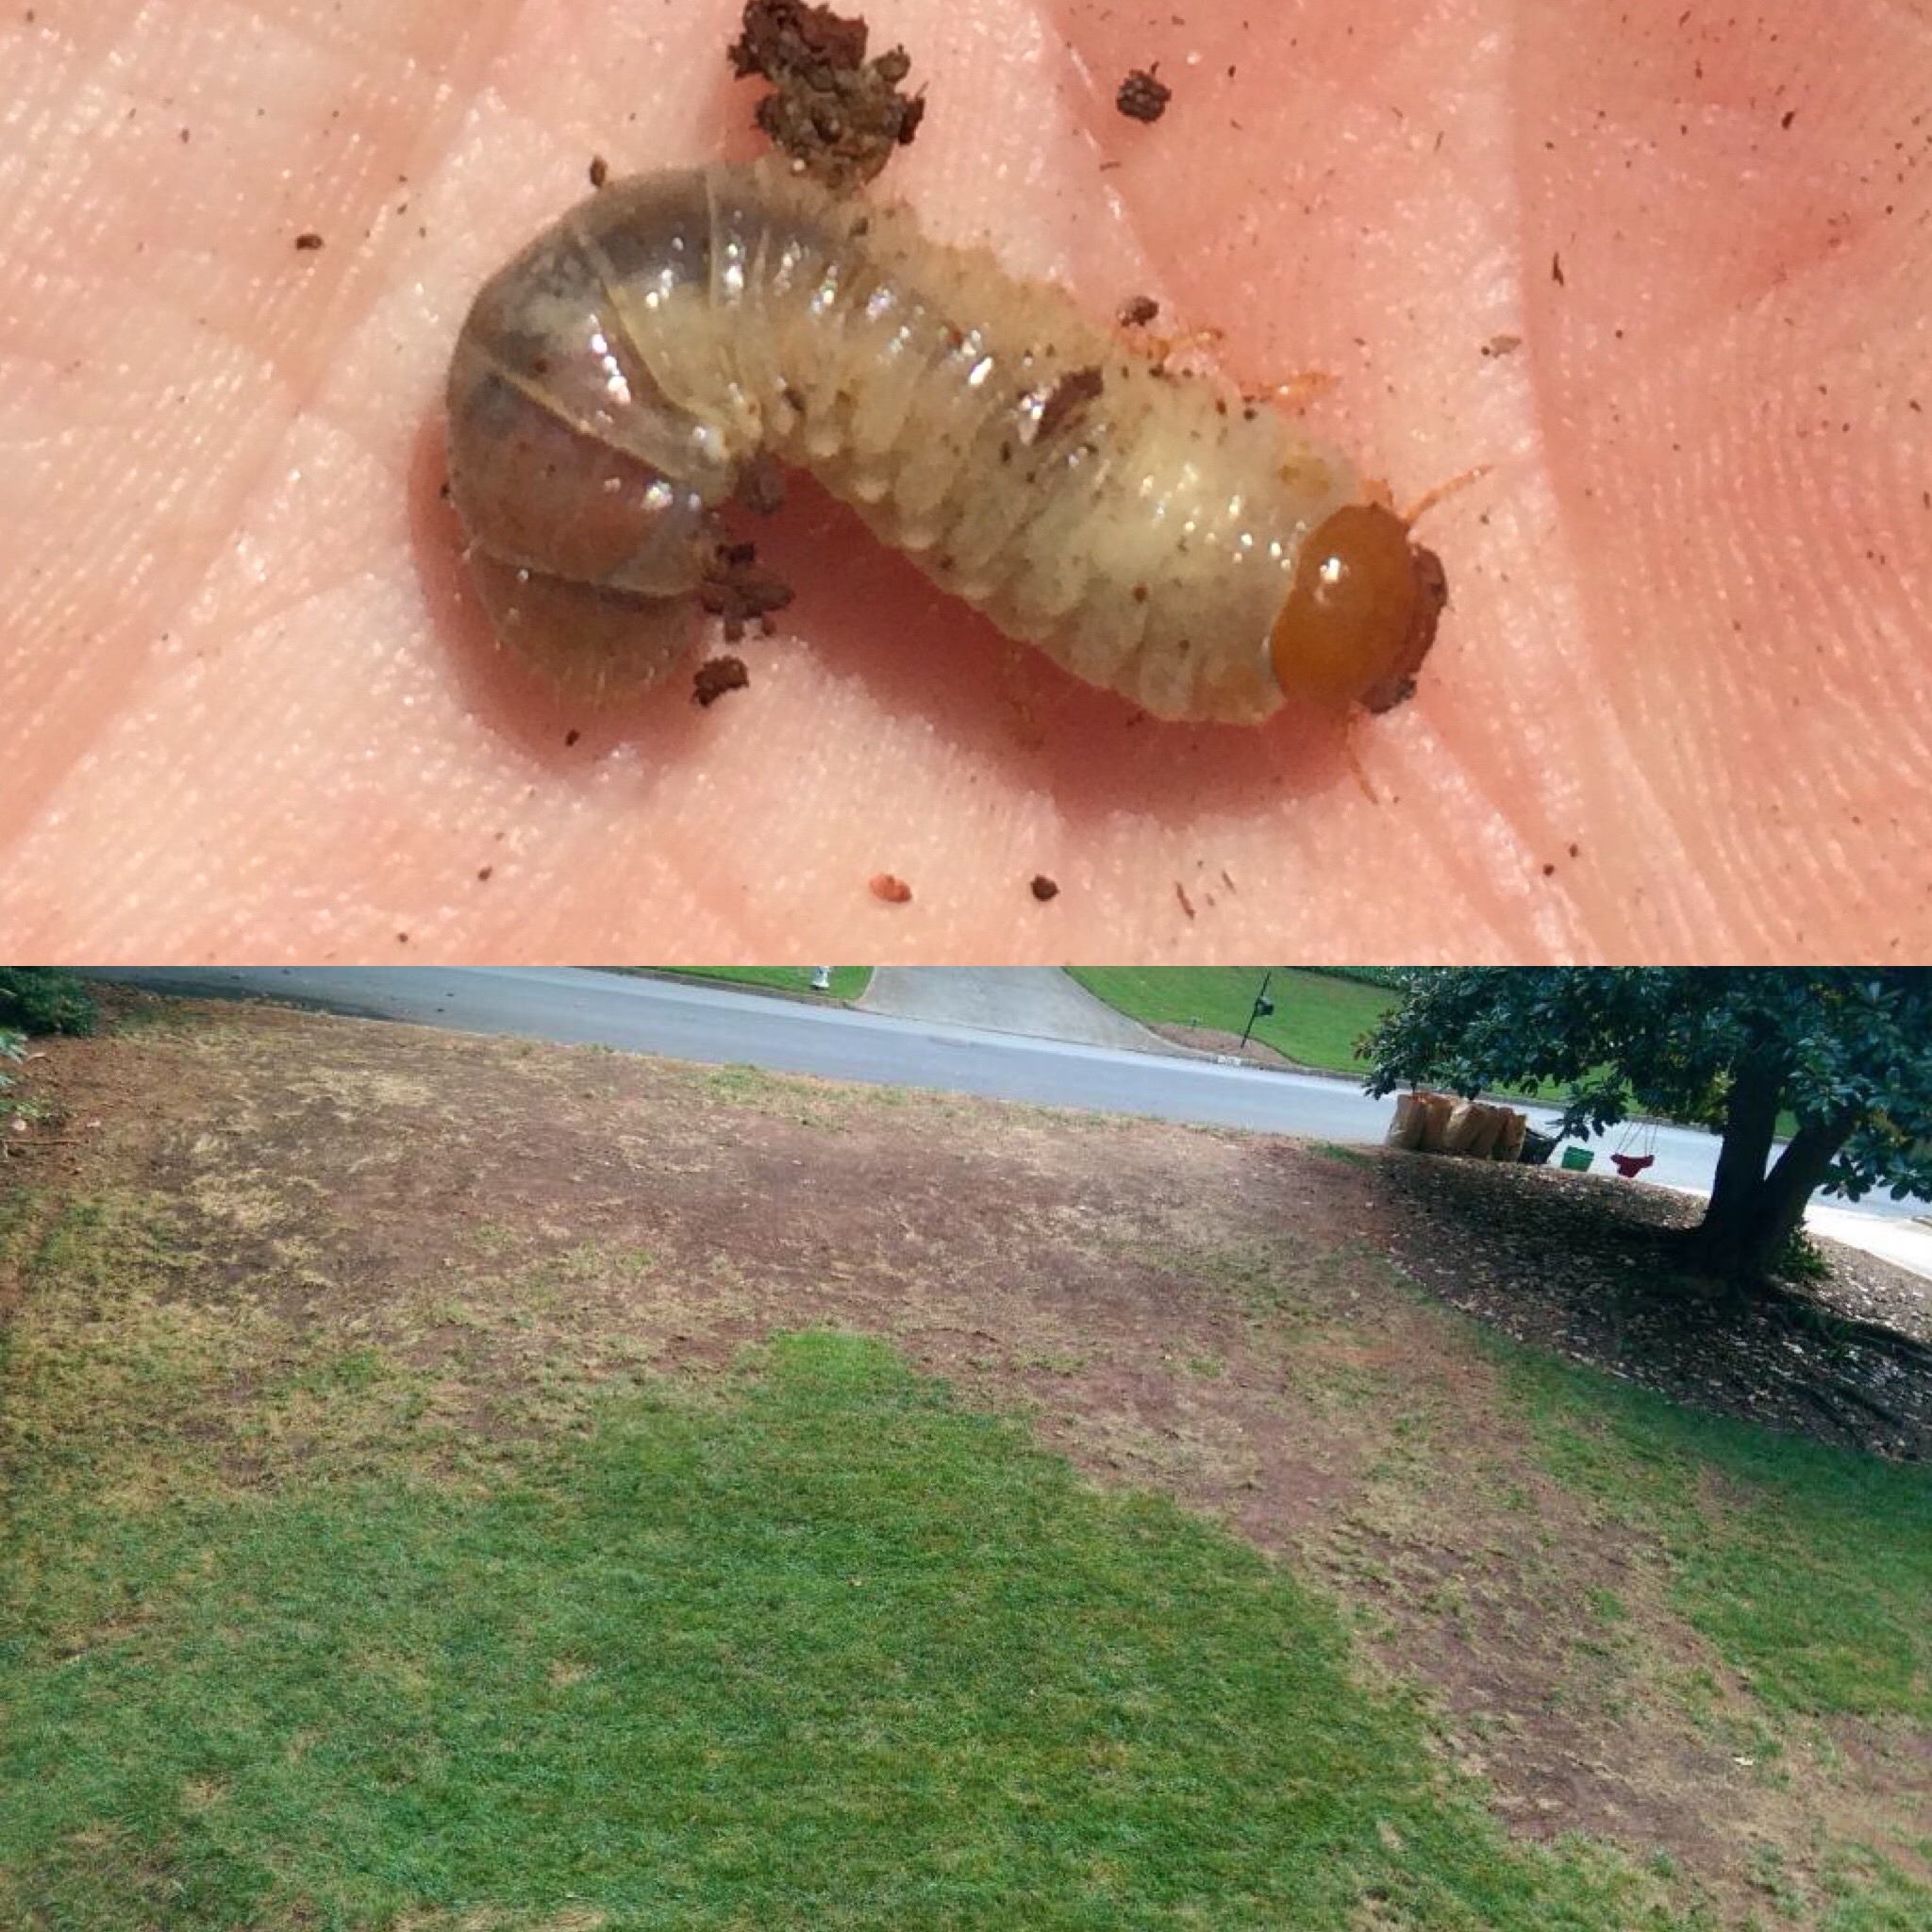 Lawn damage from grub worm infestation near Elkhart, IN.